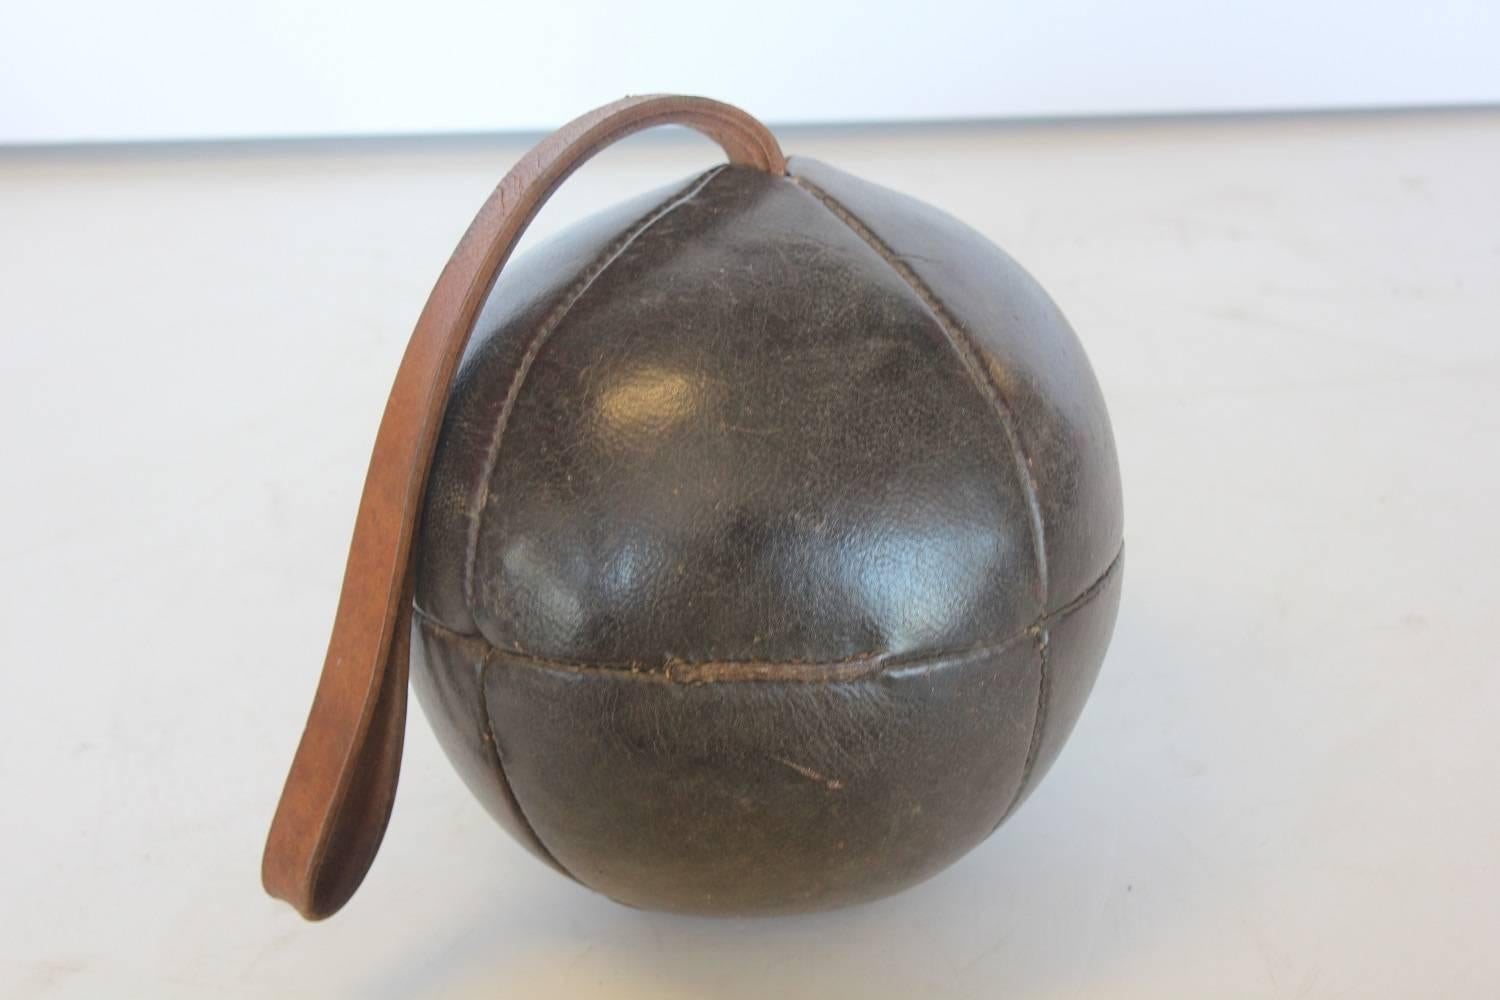 1950s German medicine leather ball.